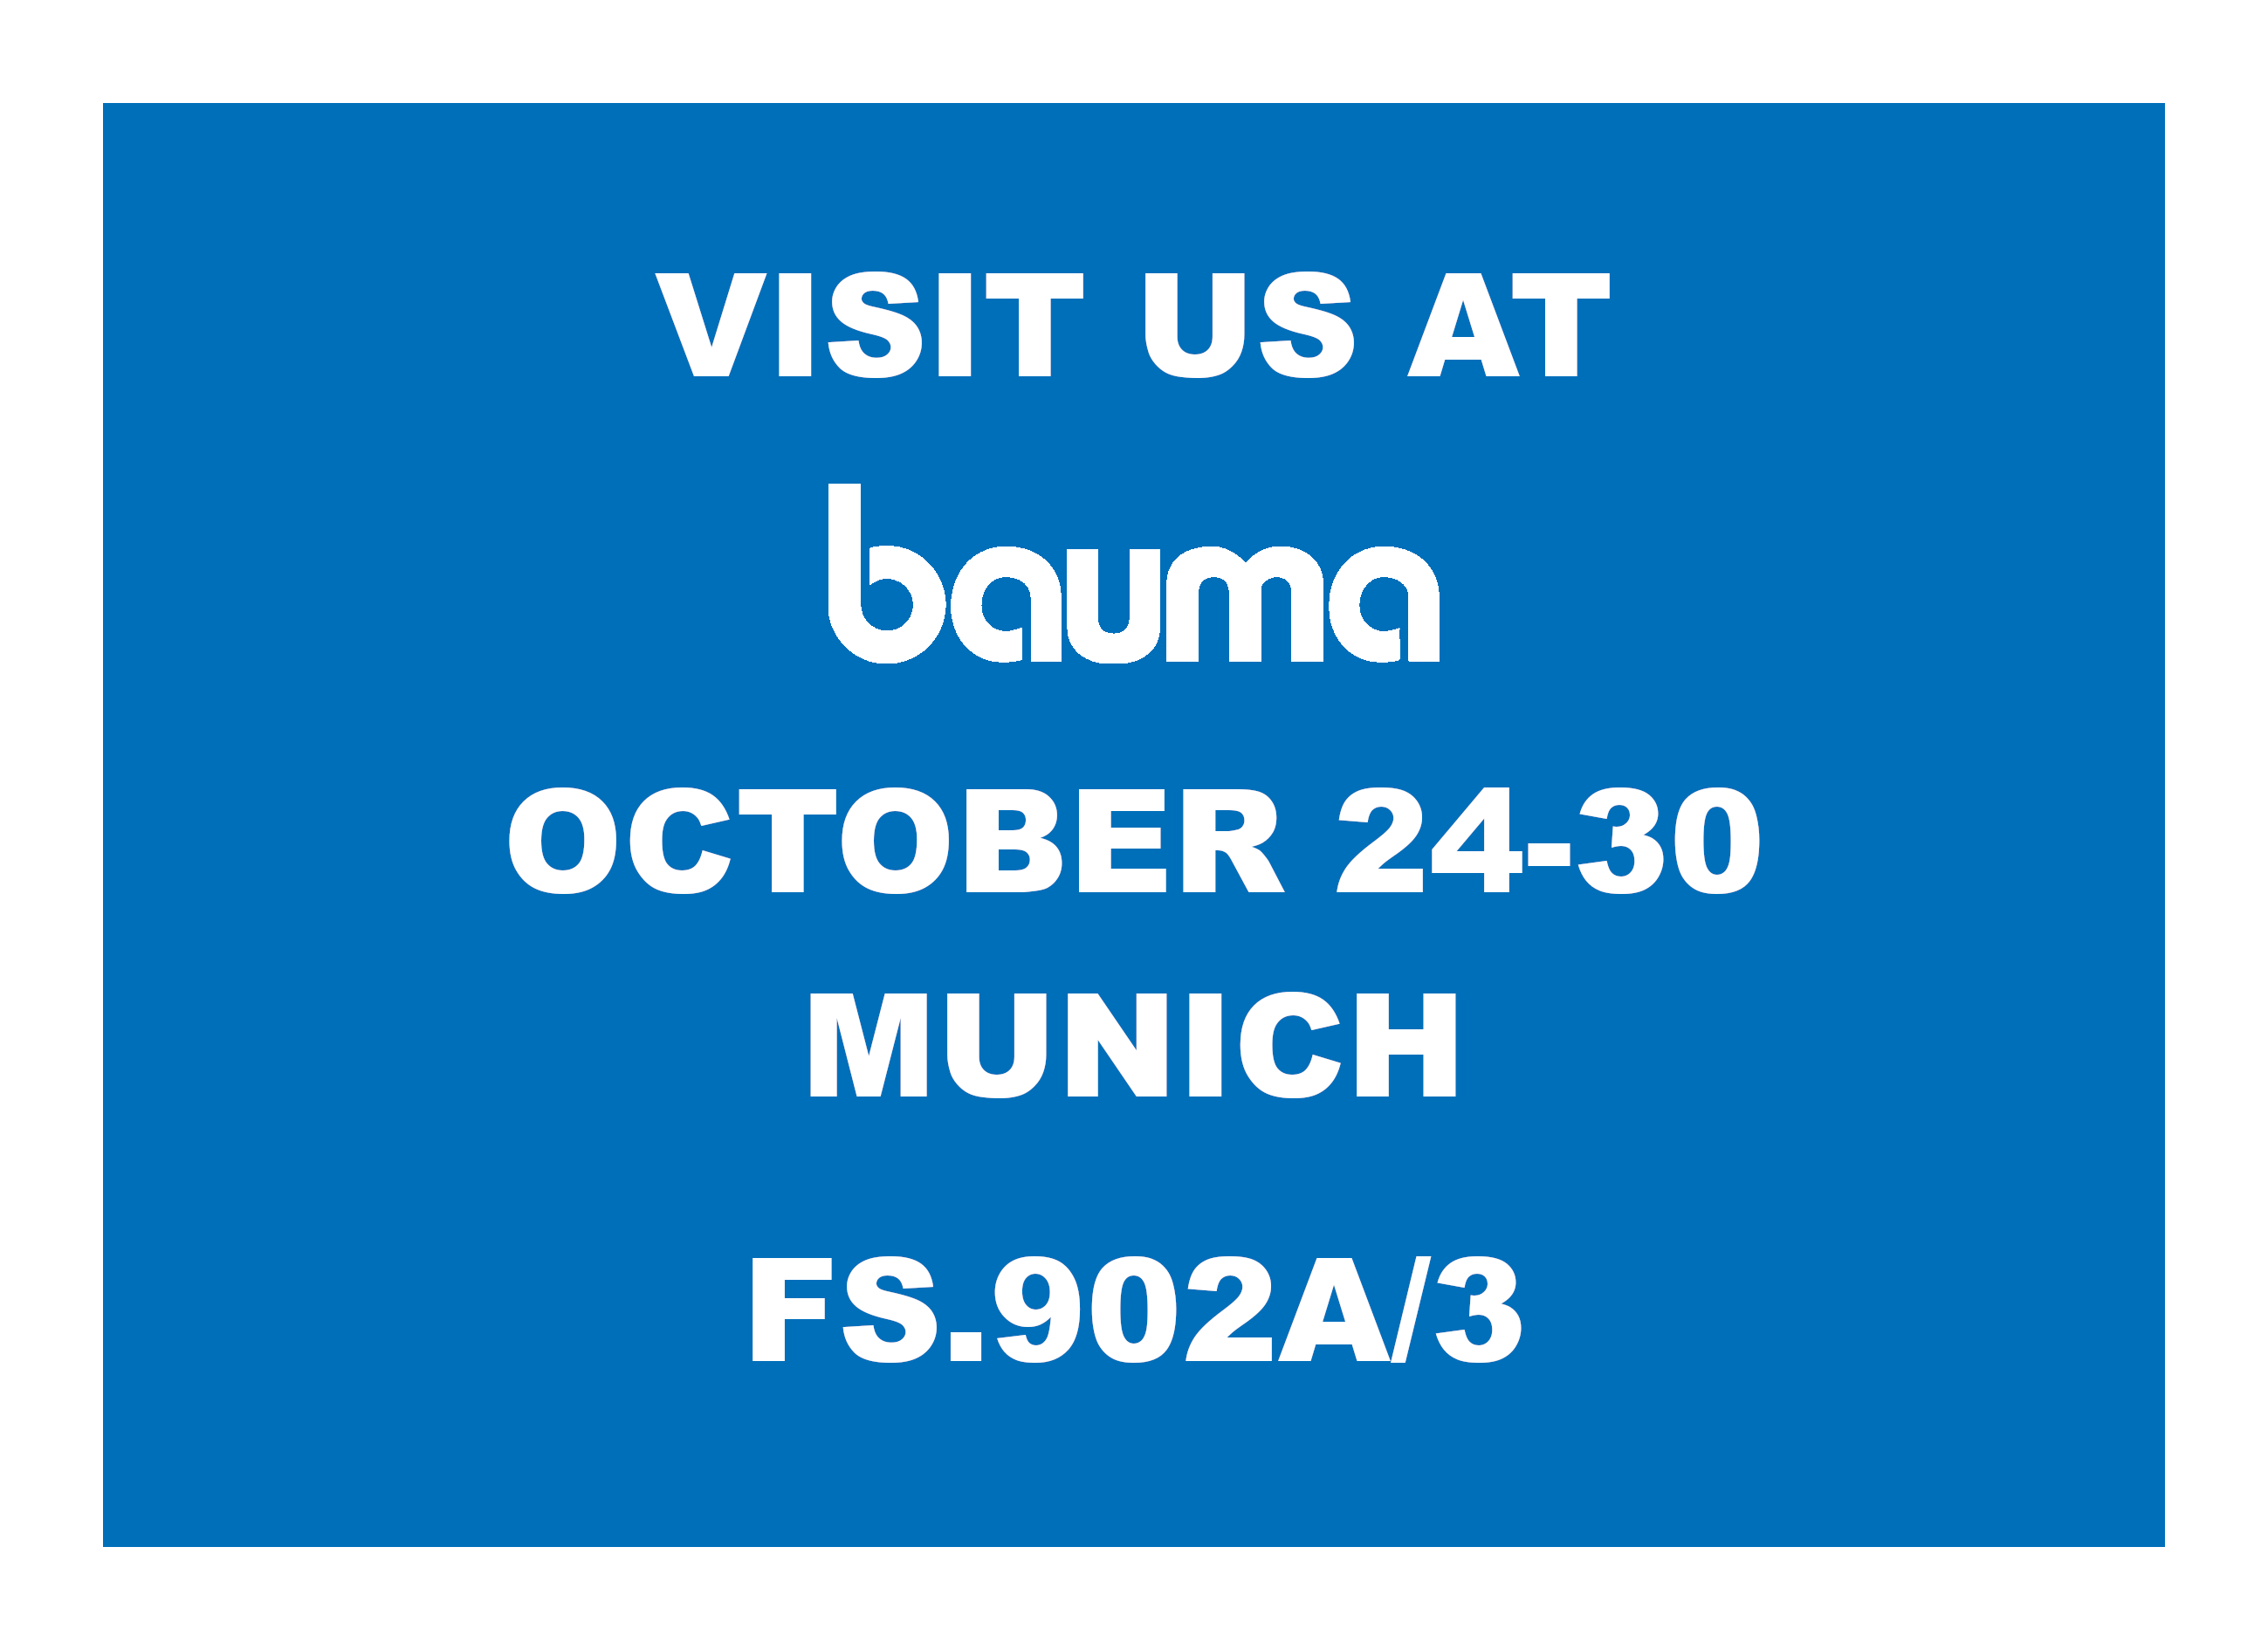 Visit us at Bauma, on October 24-30 in Munich | FS.902A/3